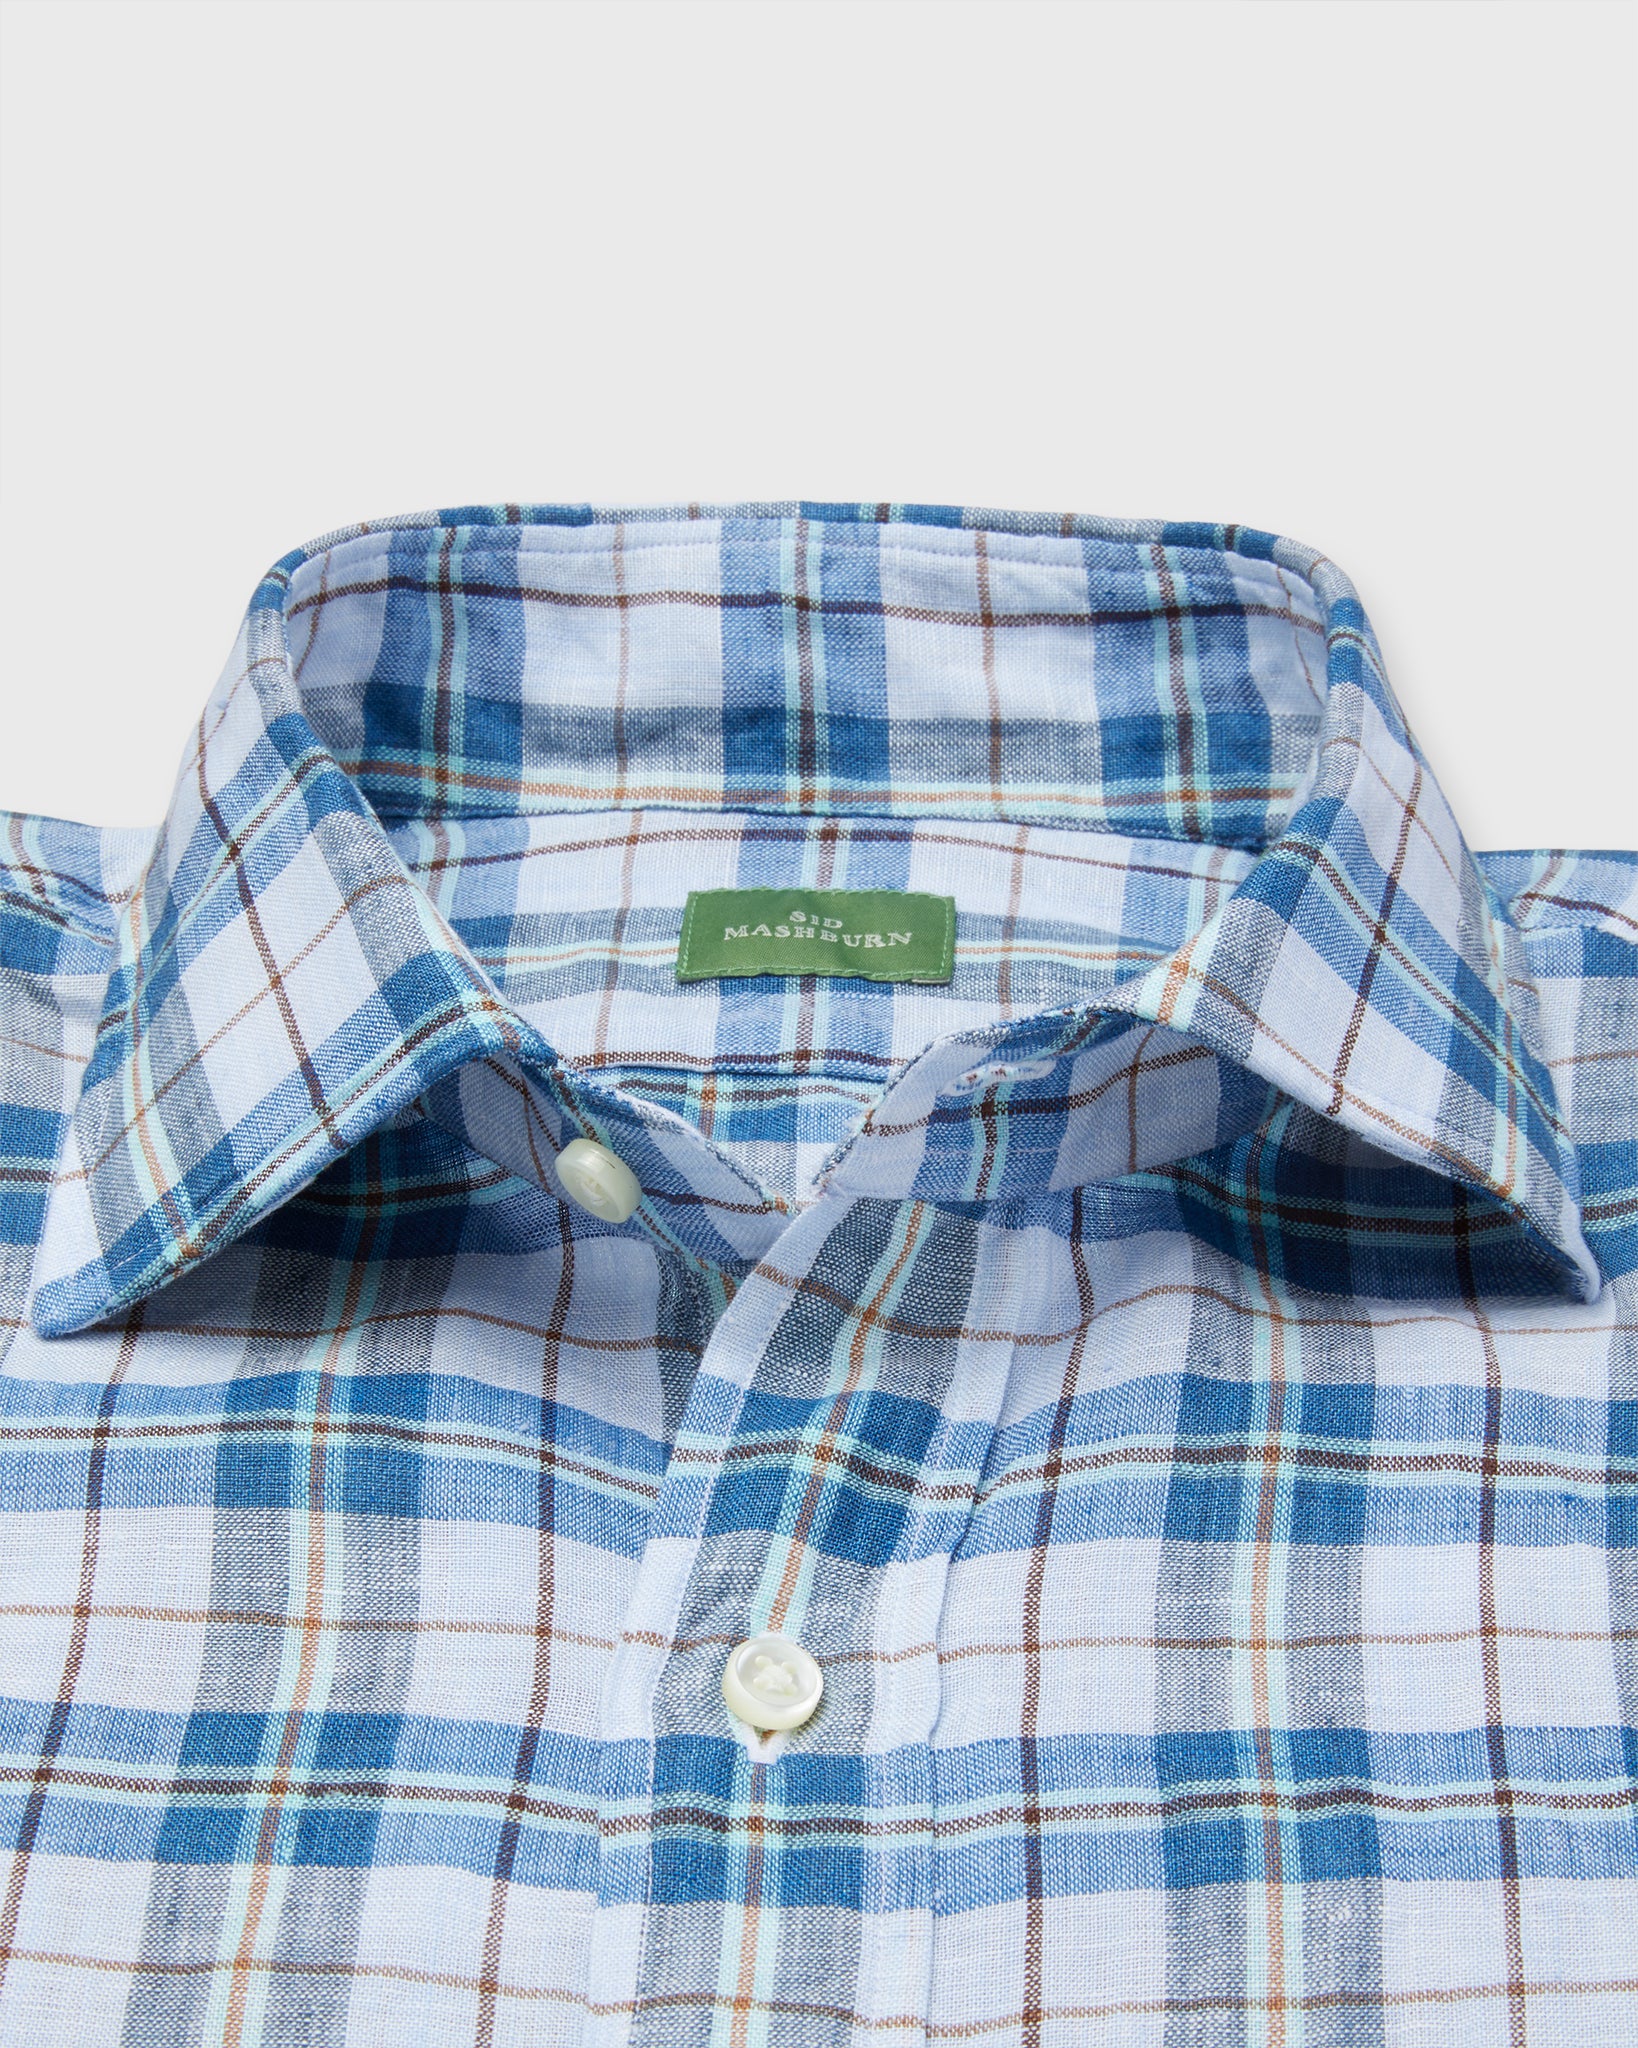 Spread Collar Sport Shirt in Peri/Brown/Navy Plaid Linen